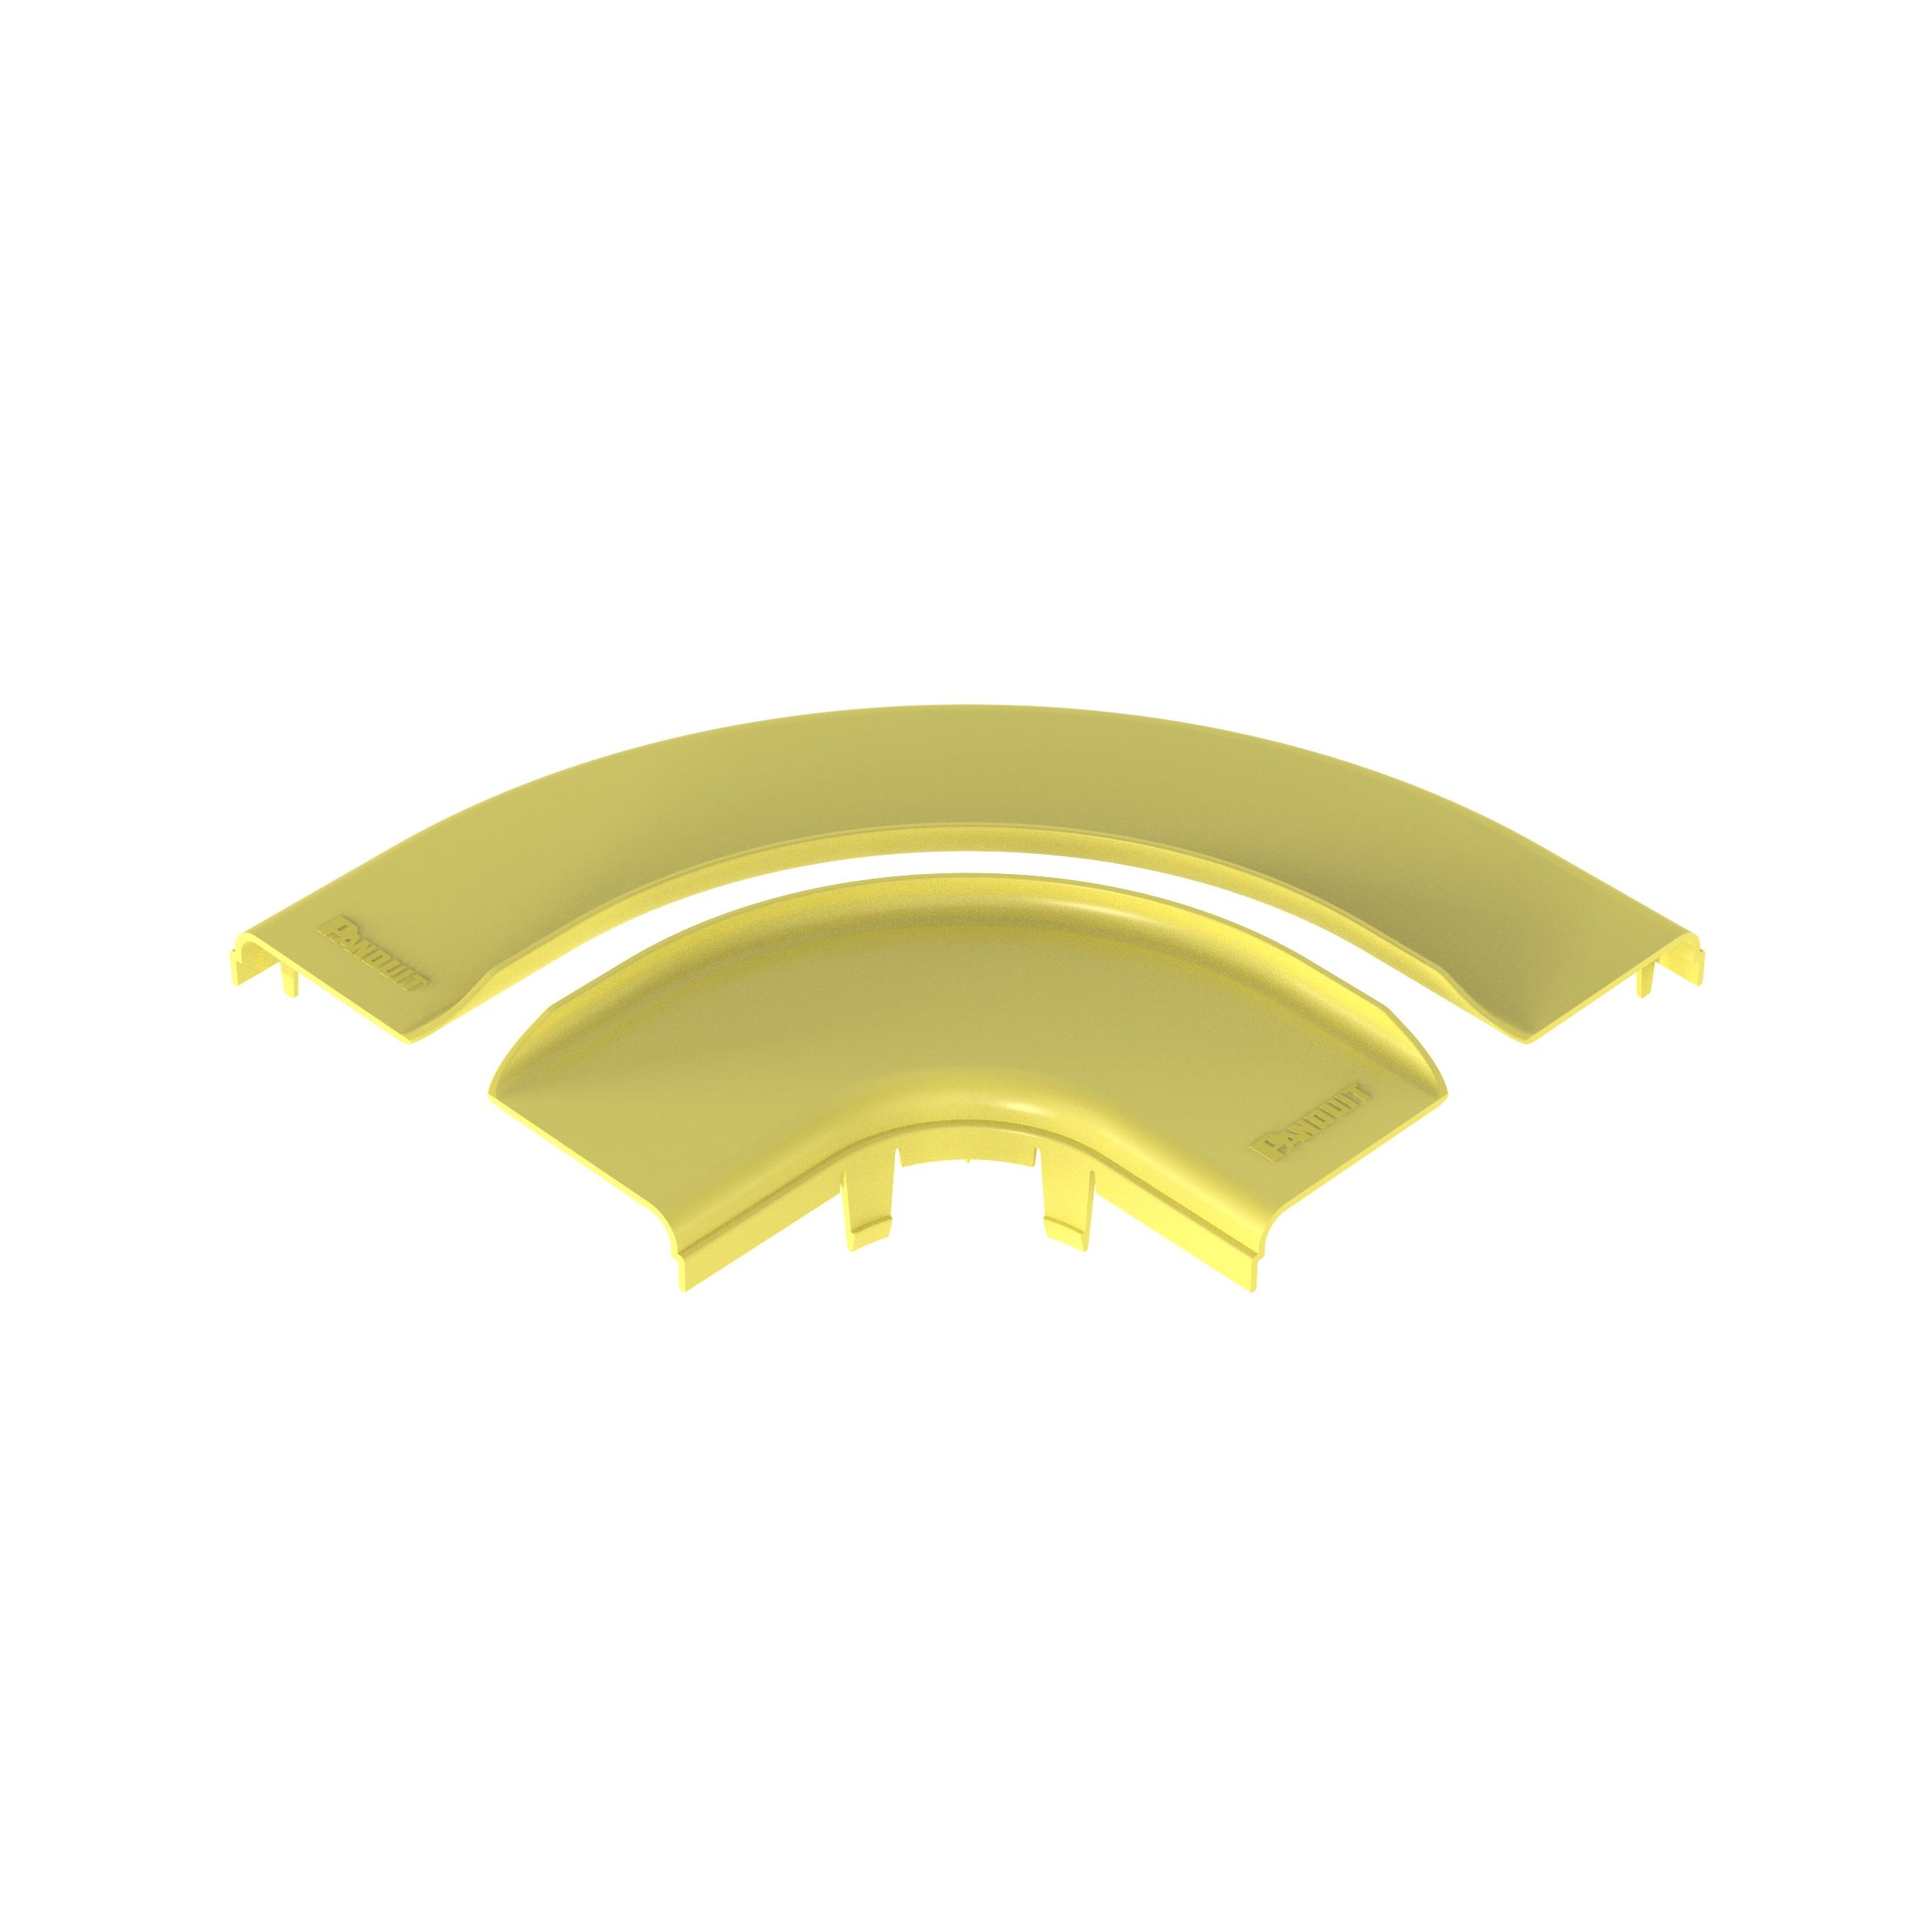 Panduit FRRASC6LYL FiberRunner® Split Cover, Horizontal Right-Angle, 6x4, Yellow